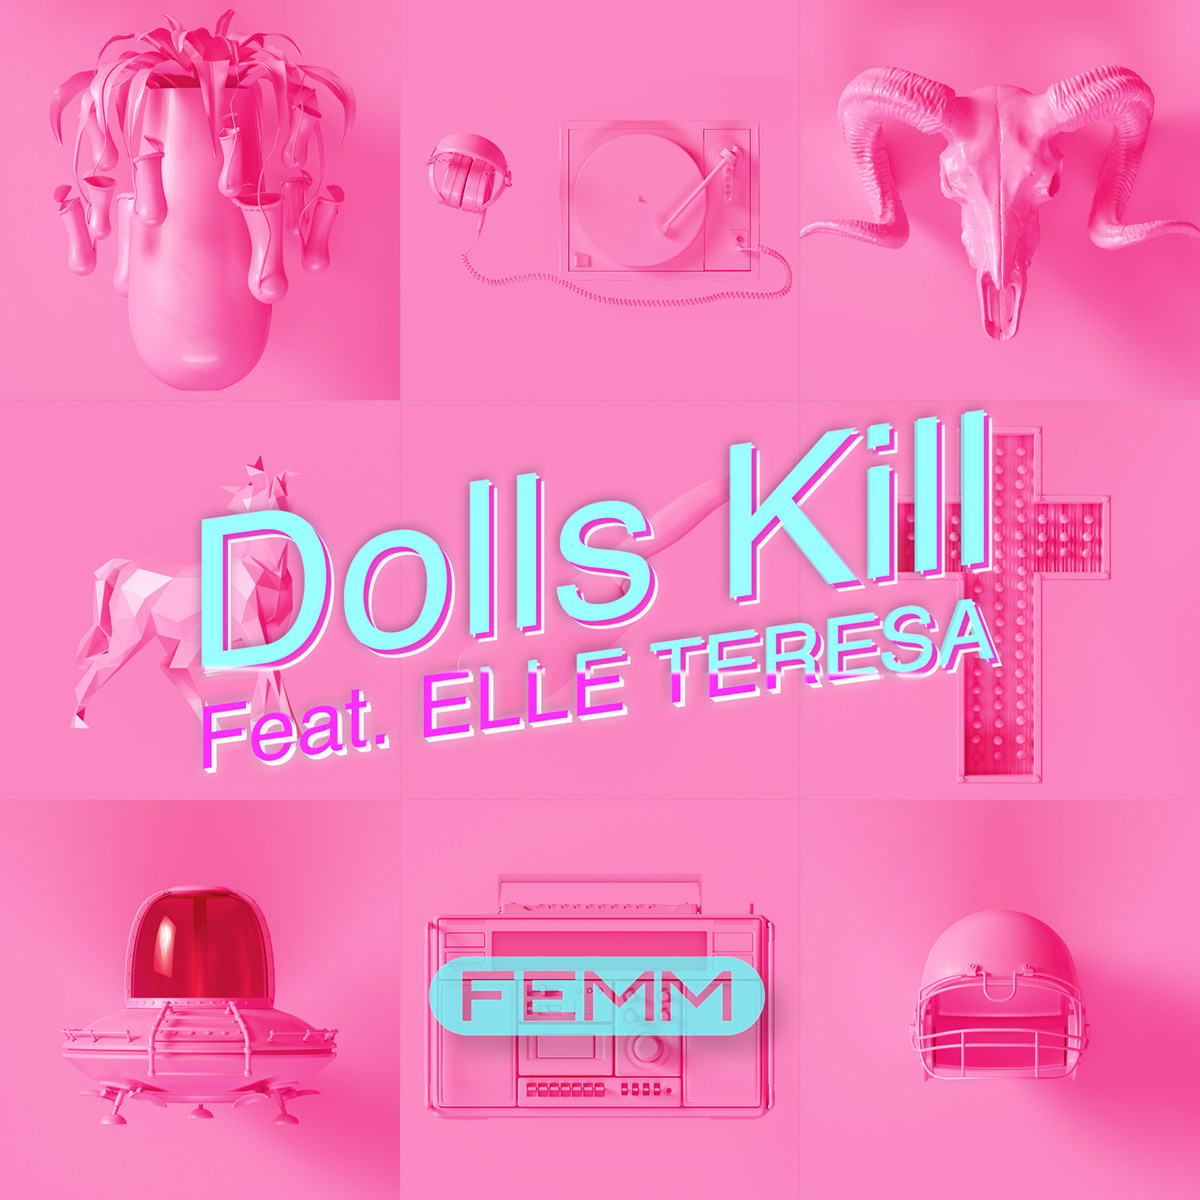 NekoPOP-FEMM-Dolls-Kill-Elle-Teresa-MV-2